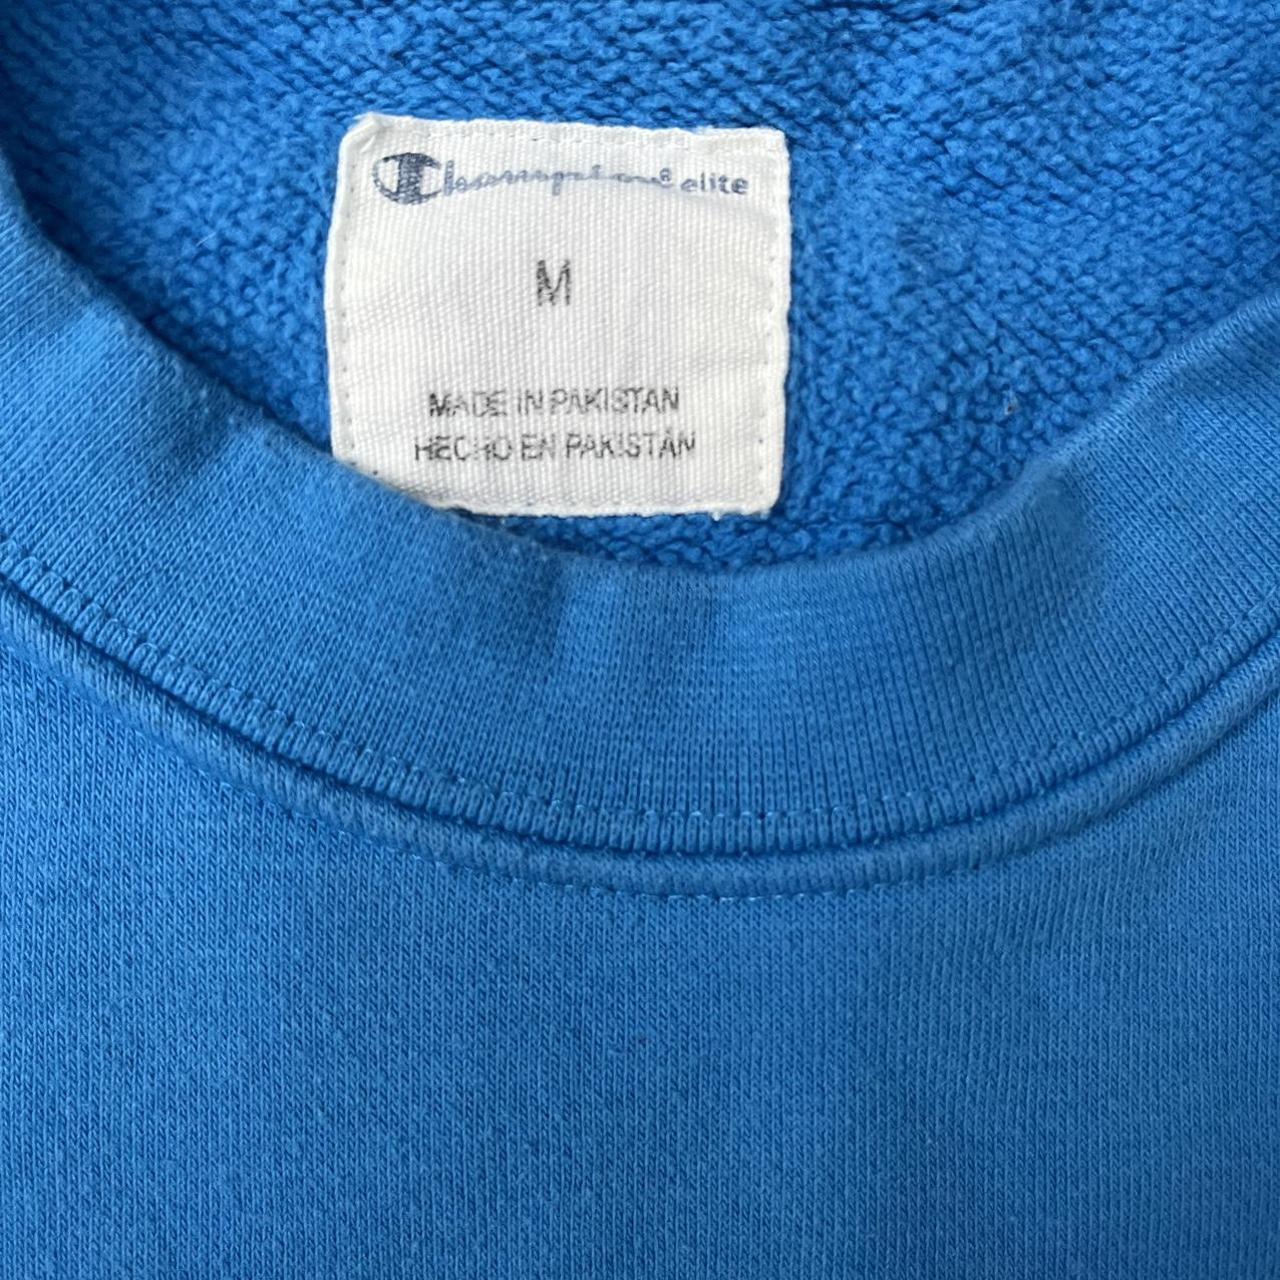 Classic Champion Blue Sweatshirt Embroidered... - Depop